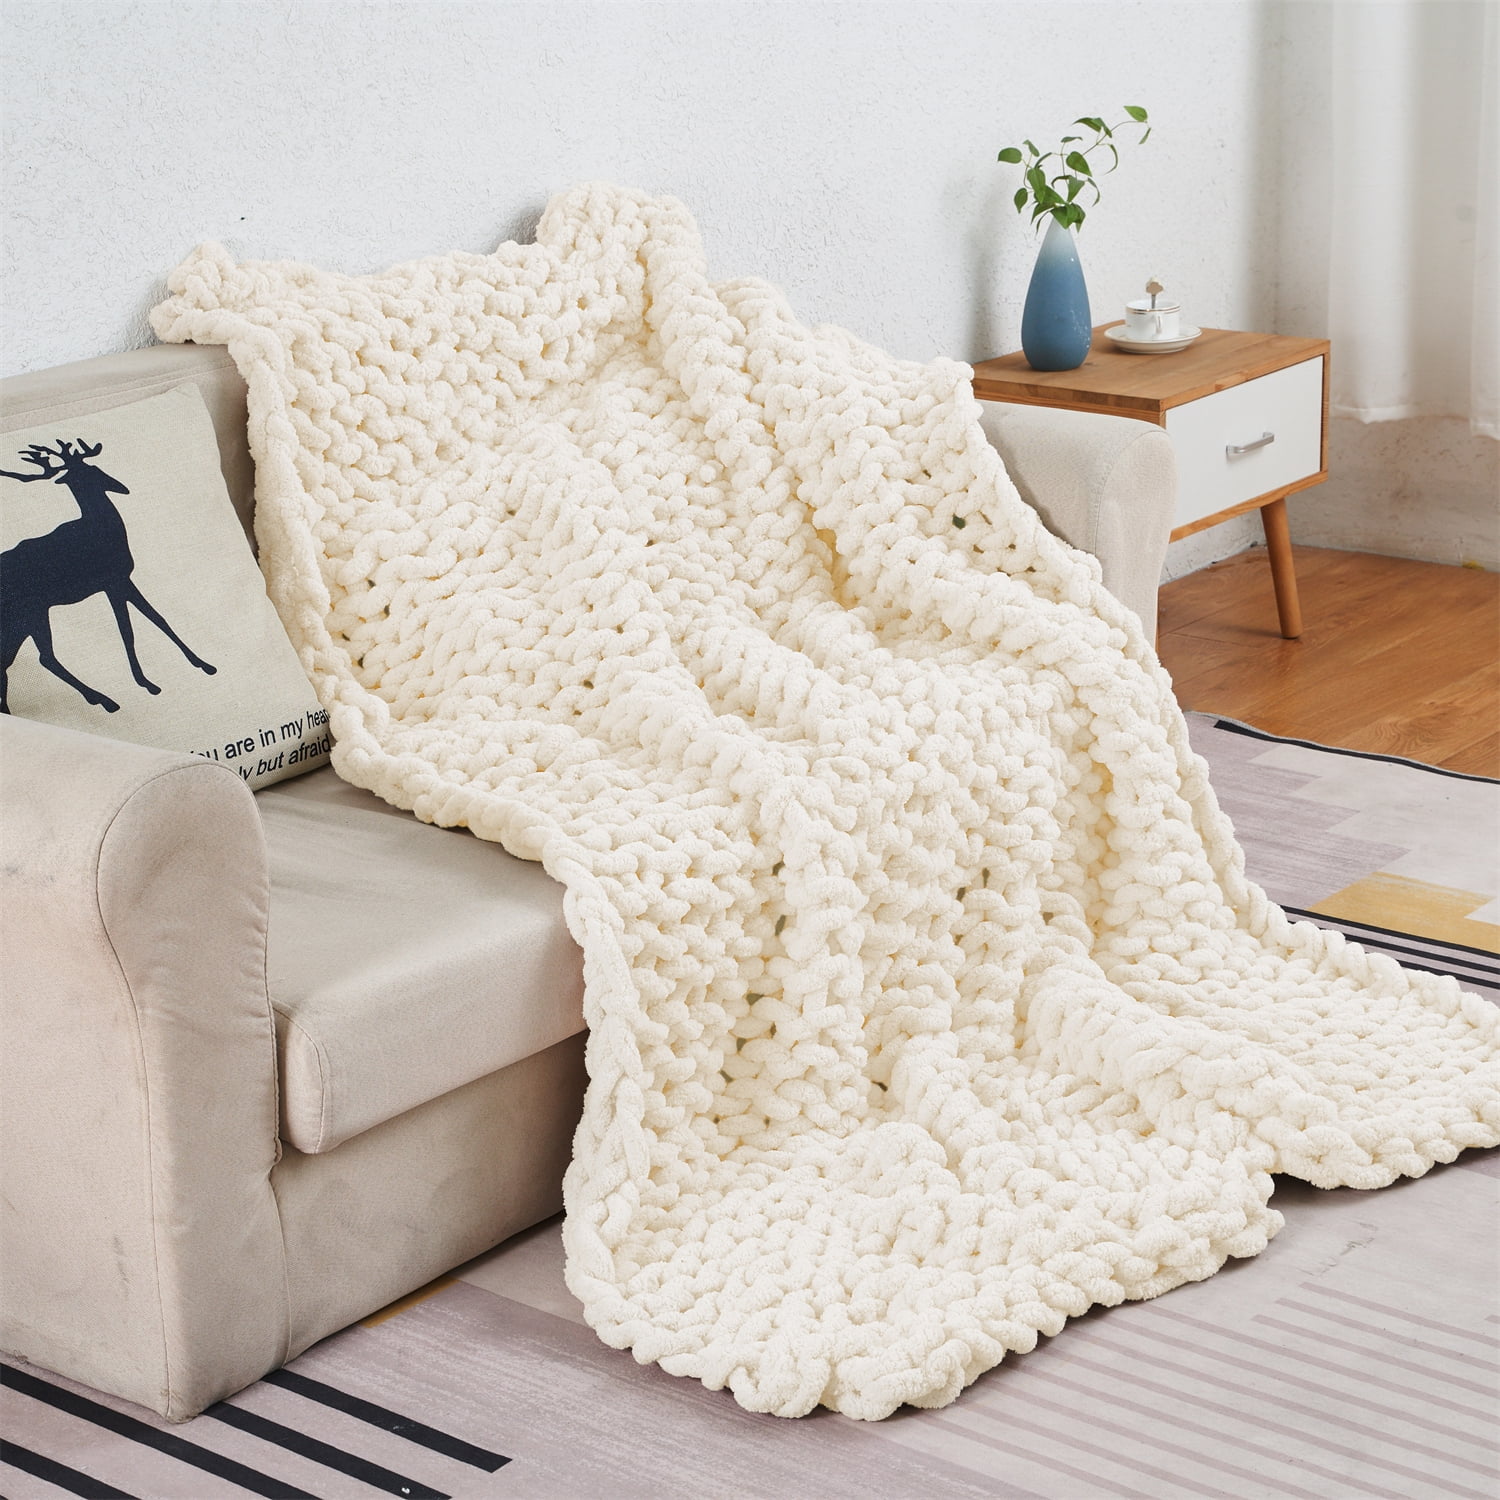 Biddeford Blankets Comfort Knit Heated Blanket Sage 1001-903292-633 Full 